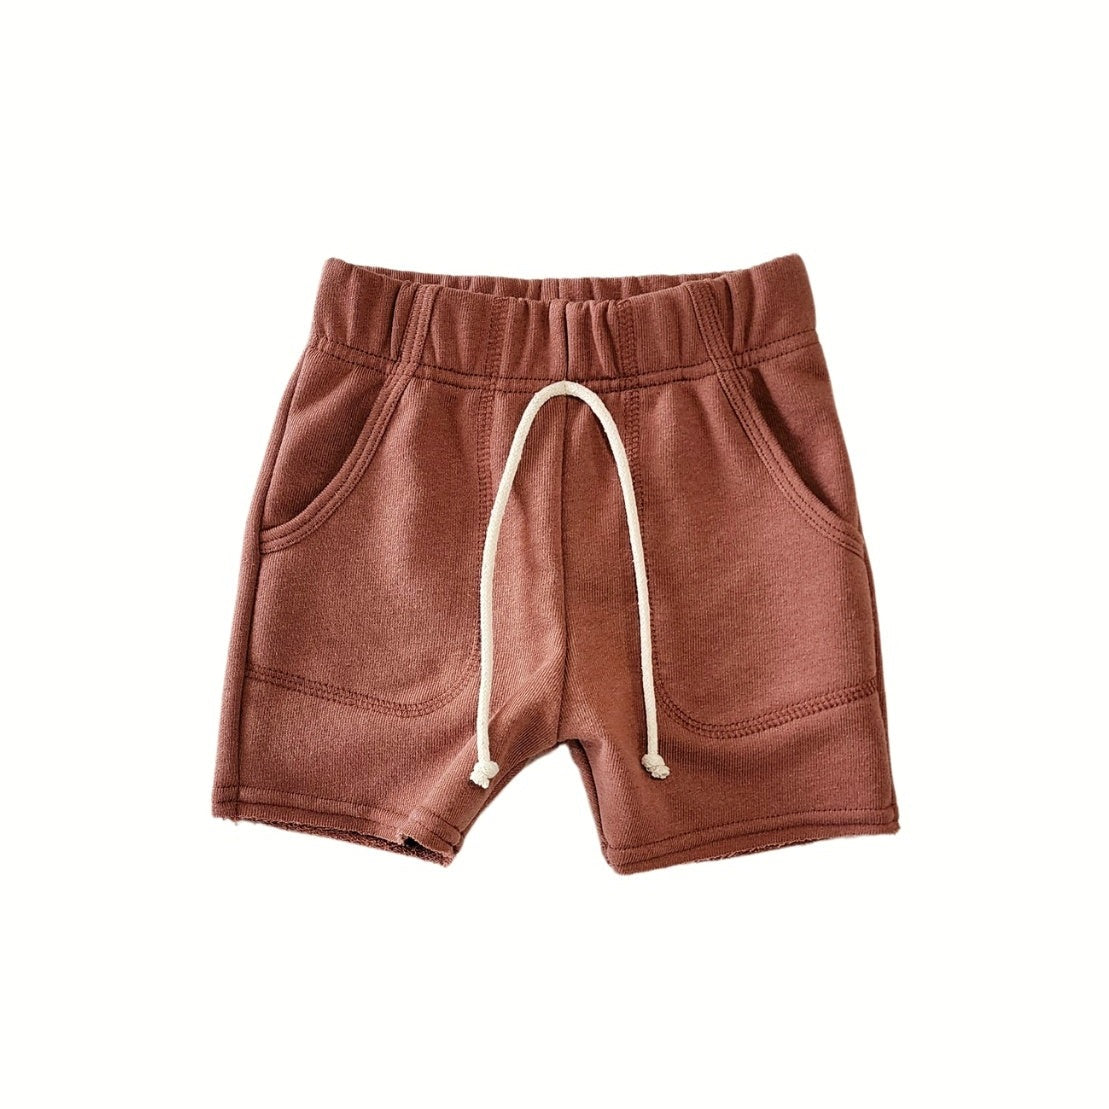 sk8 shorts - rusty